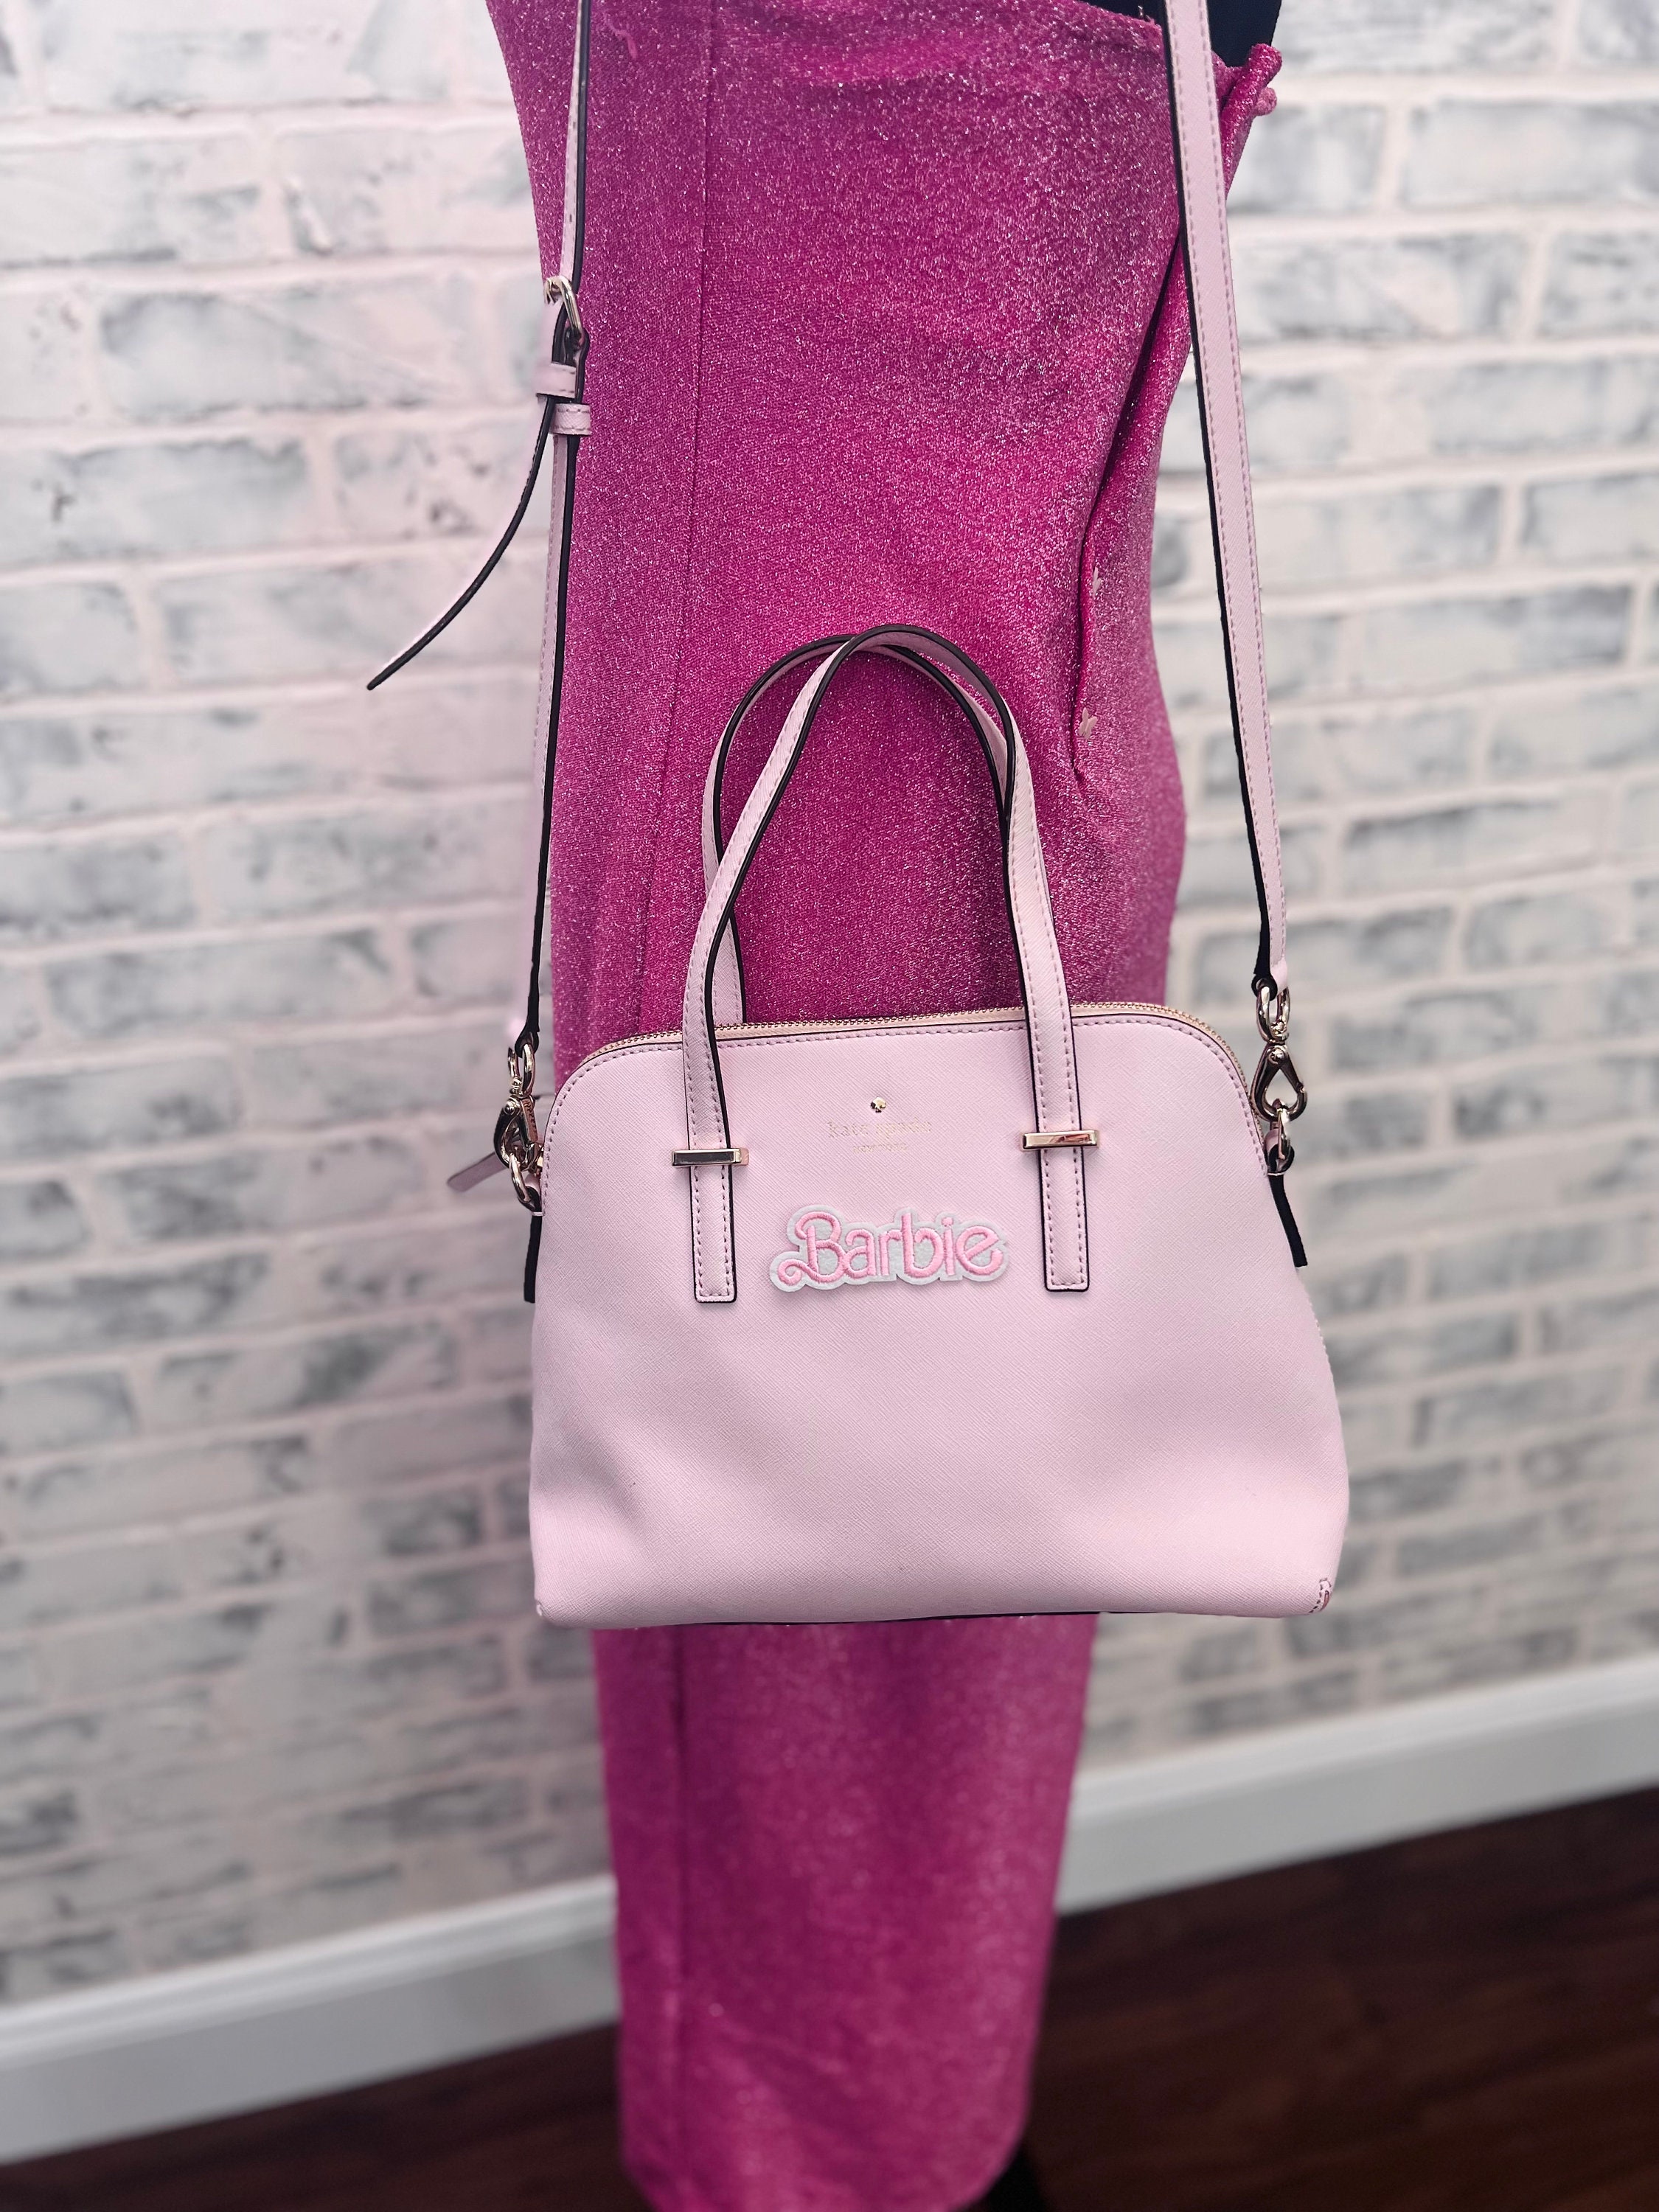 Kate Spade Pink Purse  Kate spade purse pink, Bags, Kate spade handbags